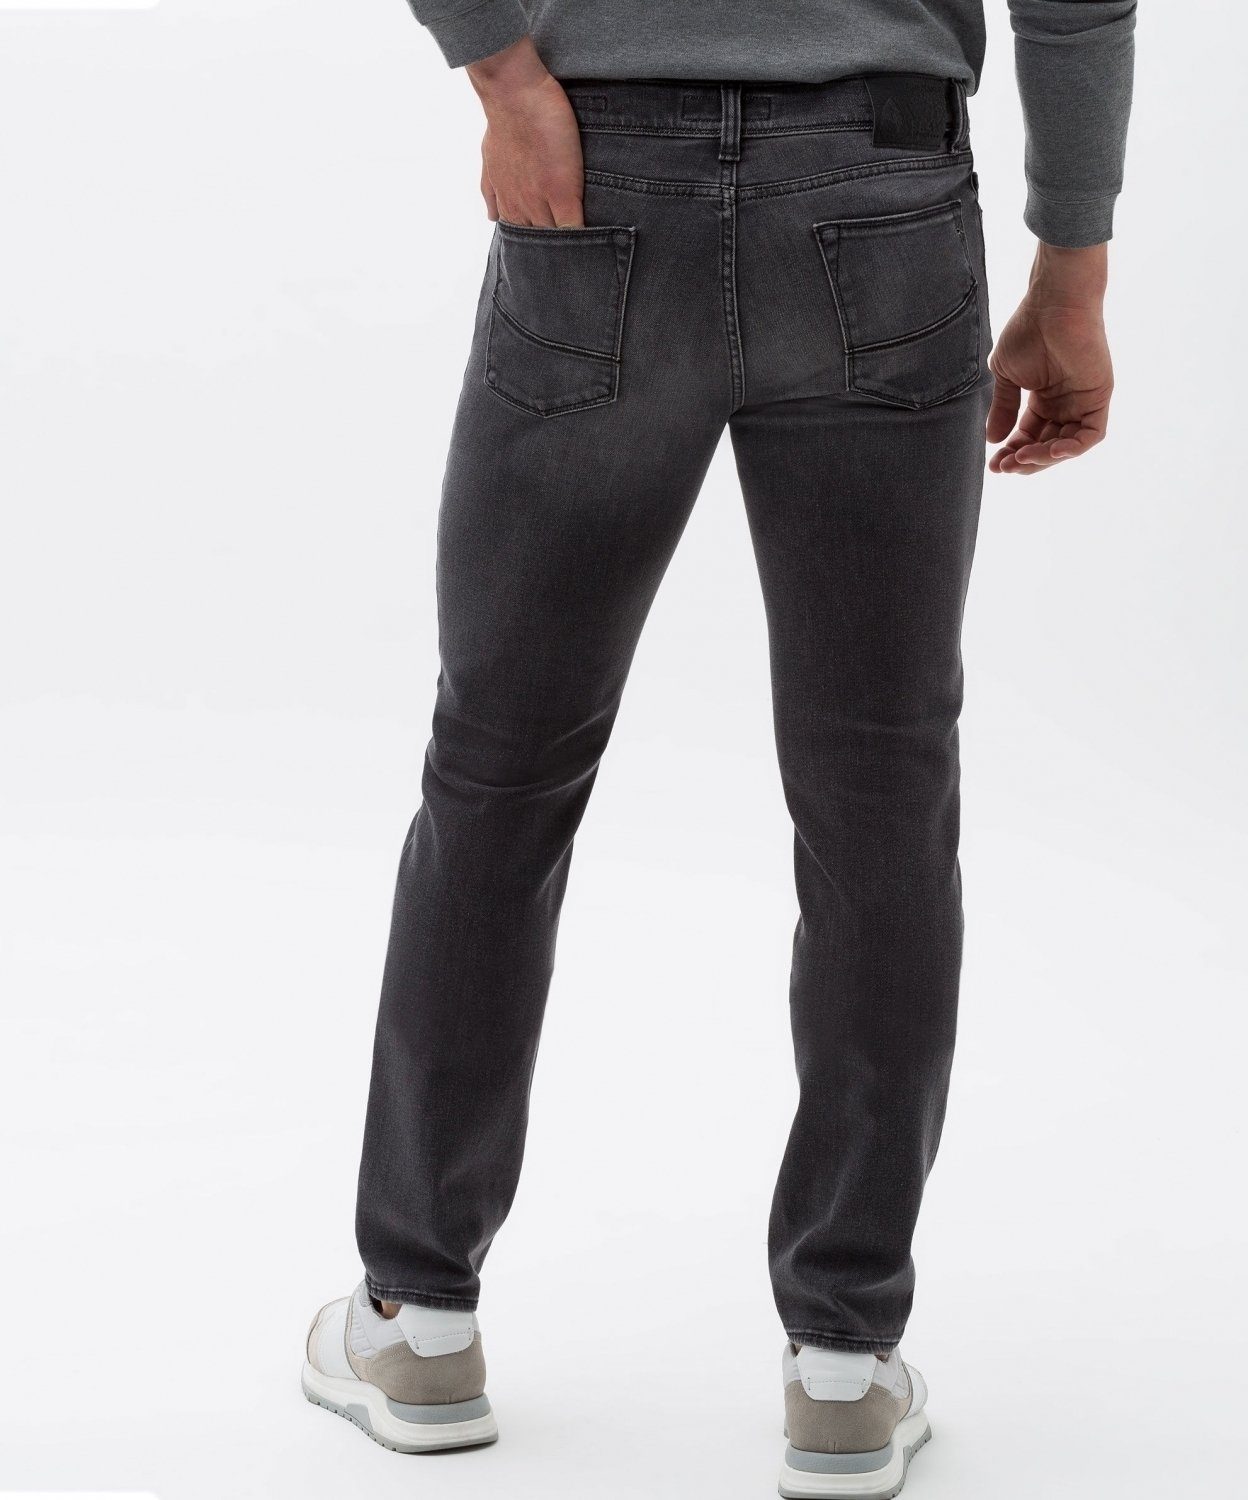 grey Herren Cadiz Brax Style 5-Pocket-Hose steel Jeans